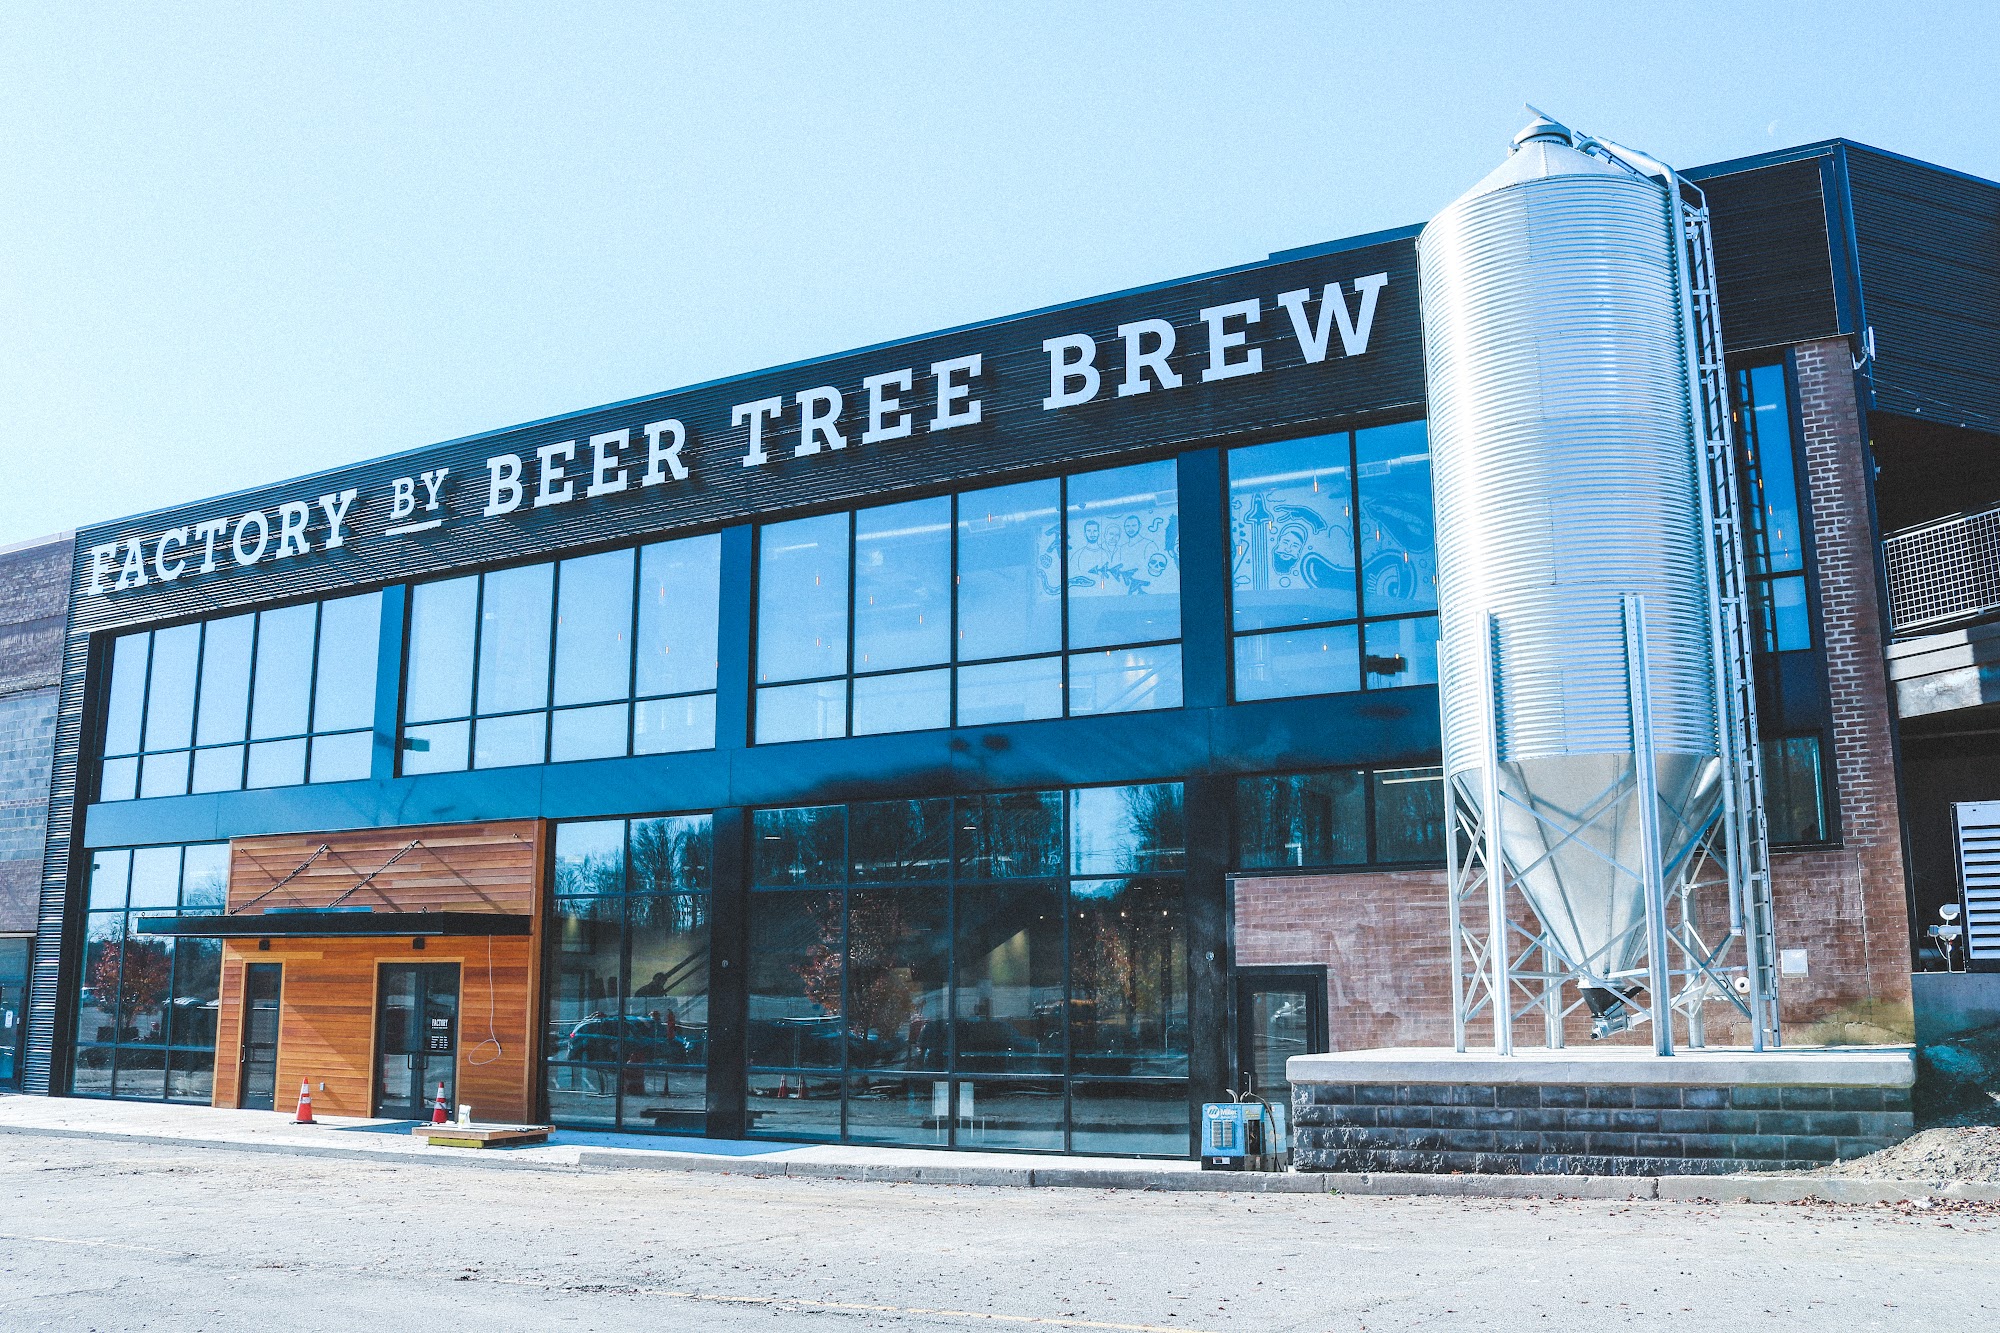 Factory by Beer Tree Brew